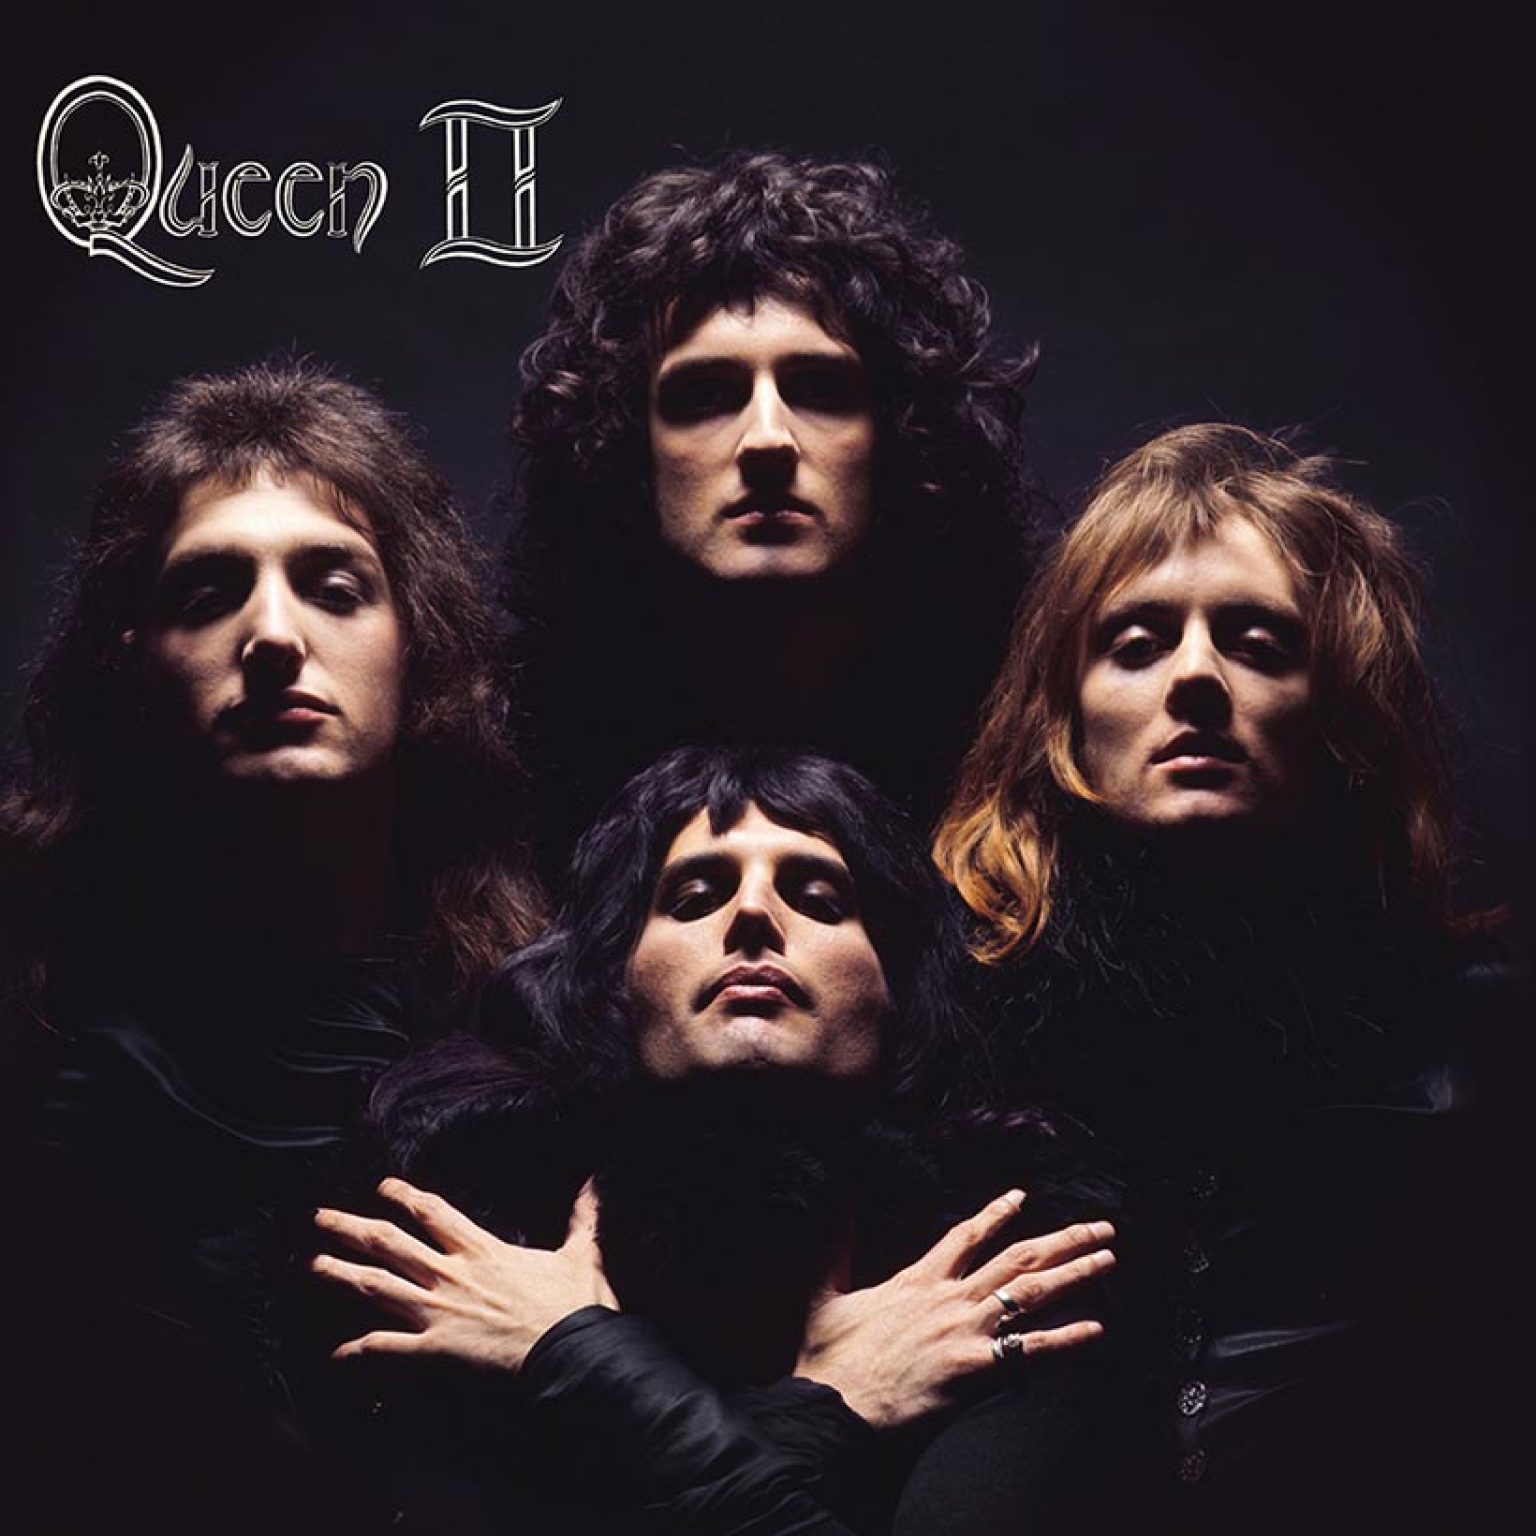 PORTADAS. TOP 5 - Página 8 Queen-II-album-cover-820-1536x1536-1